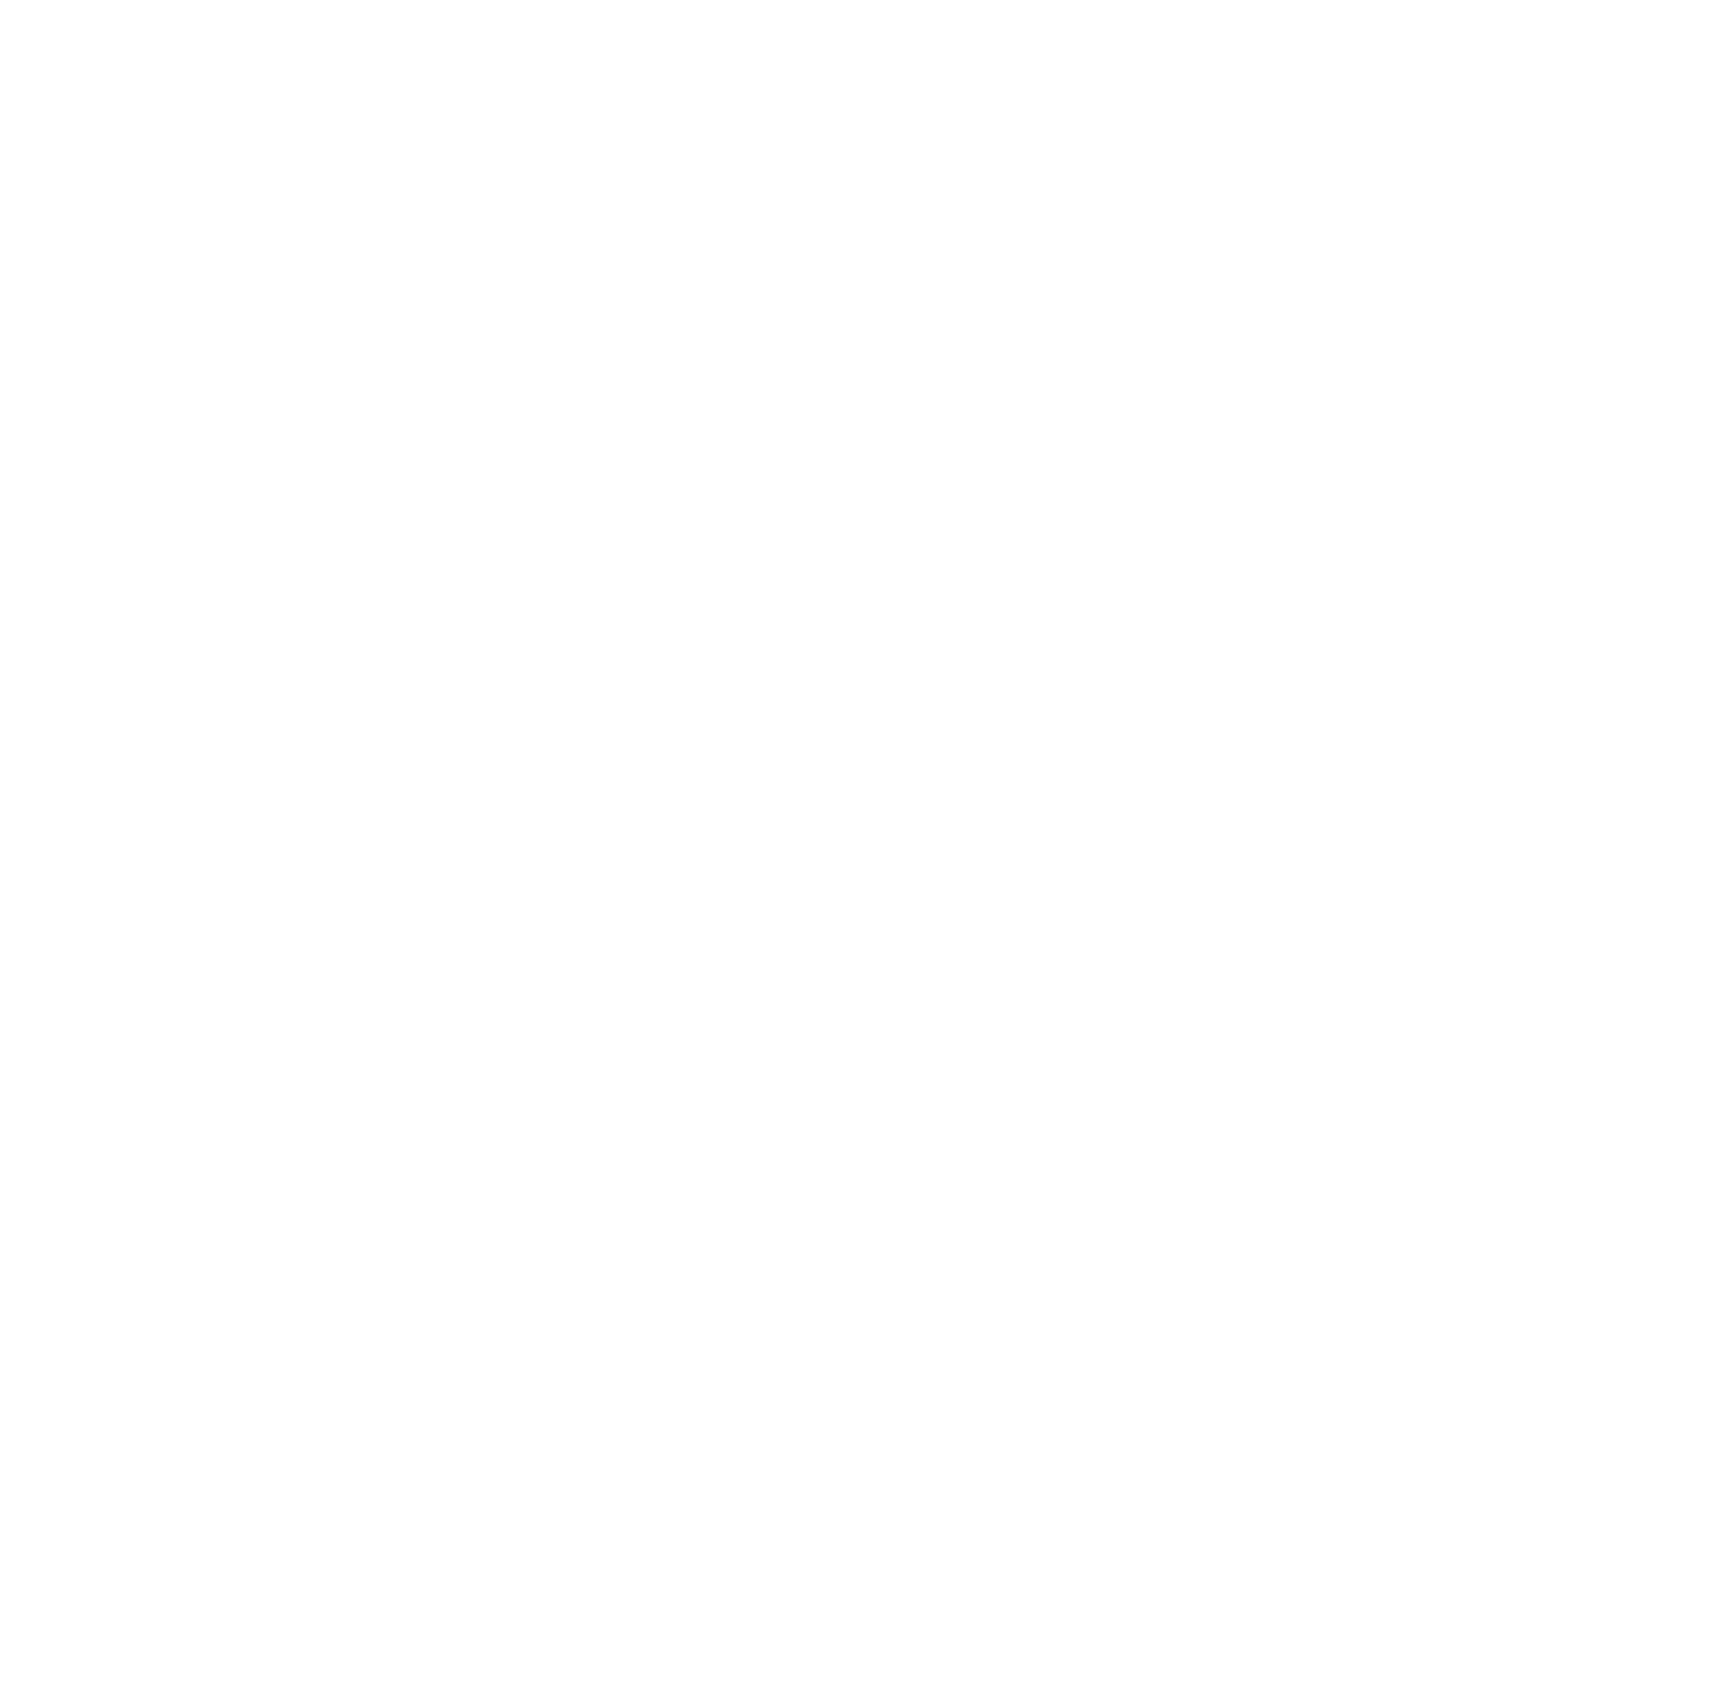 Matador Resources logo for dark backgrounds (transparent PNG)